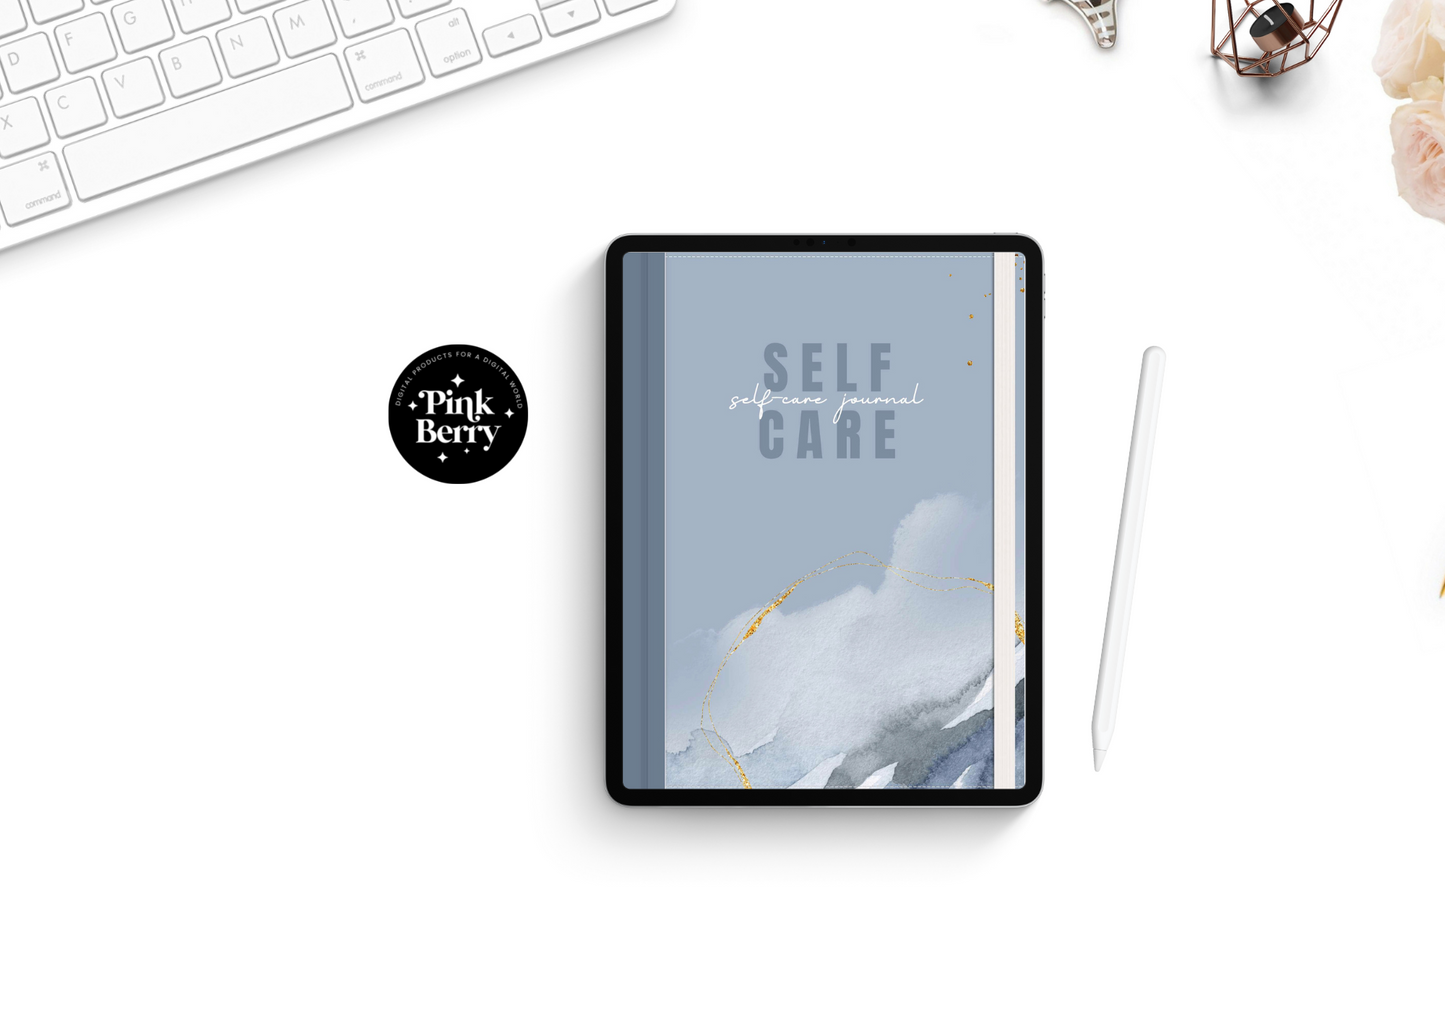 PLR Digital Self Care Journal, Self Care Planner, Wellness journal For Commercial Use Media 1 of 5